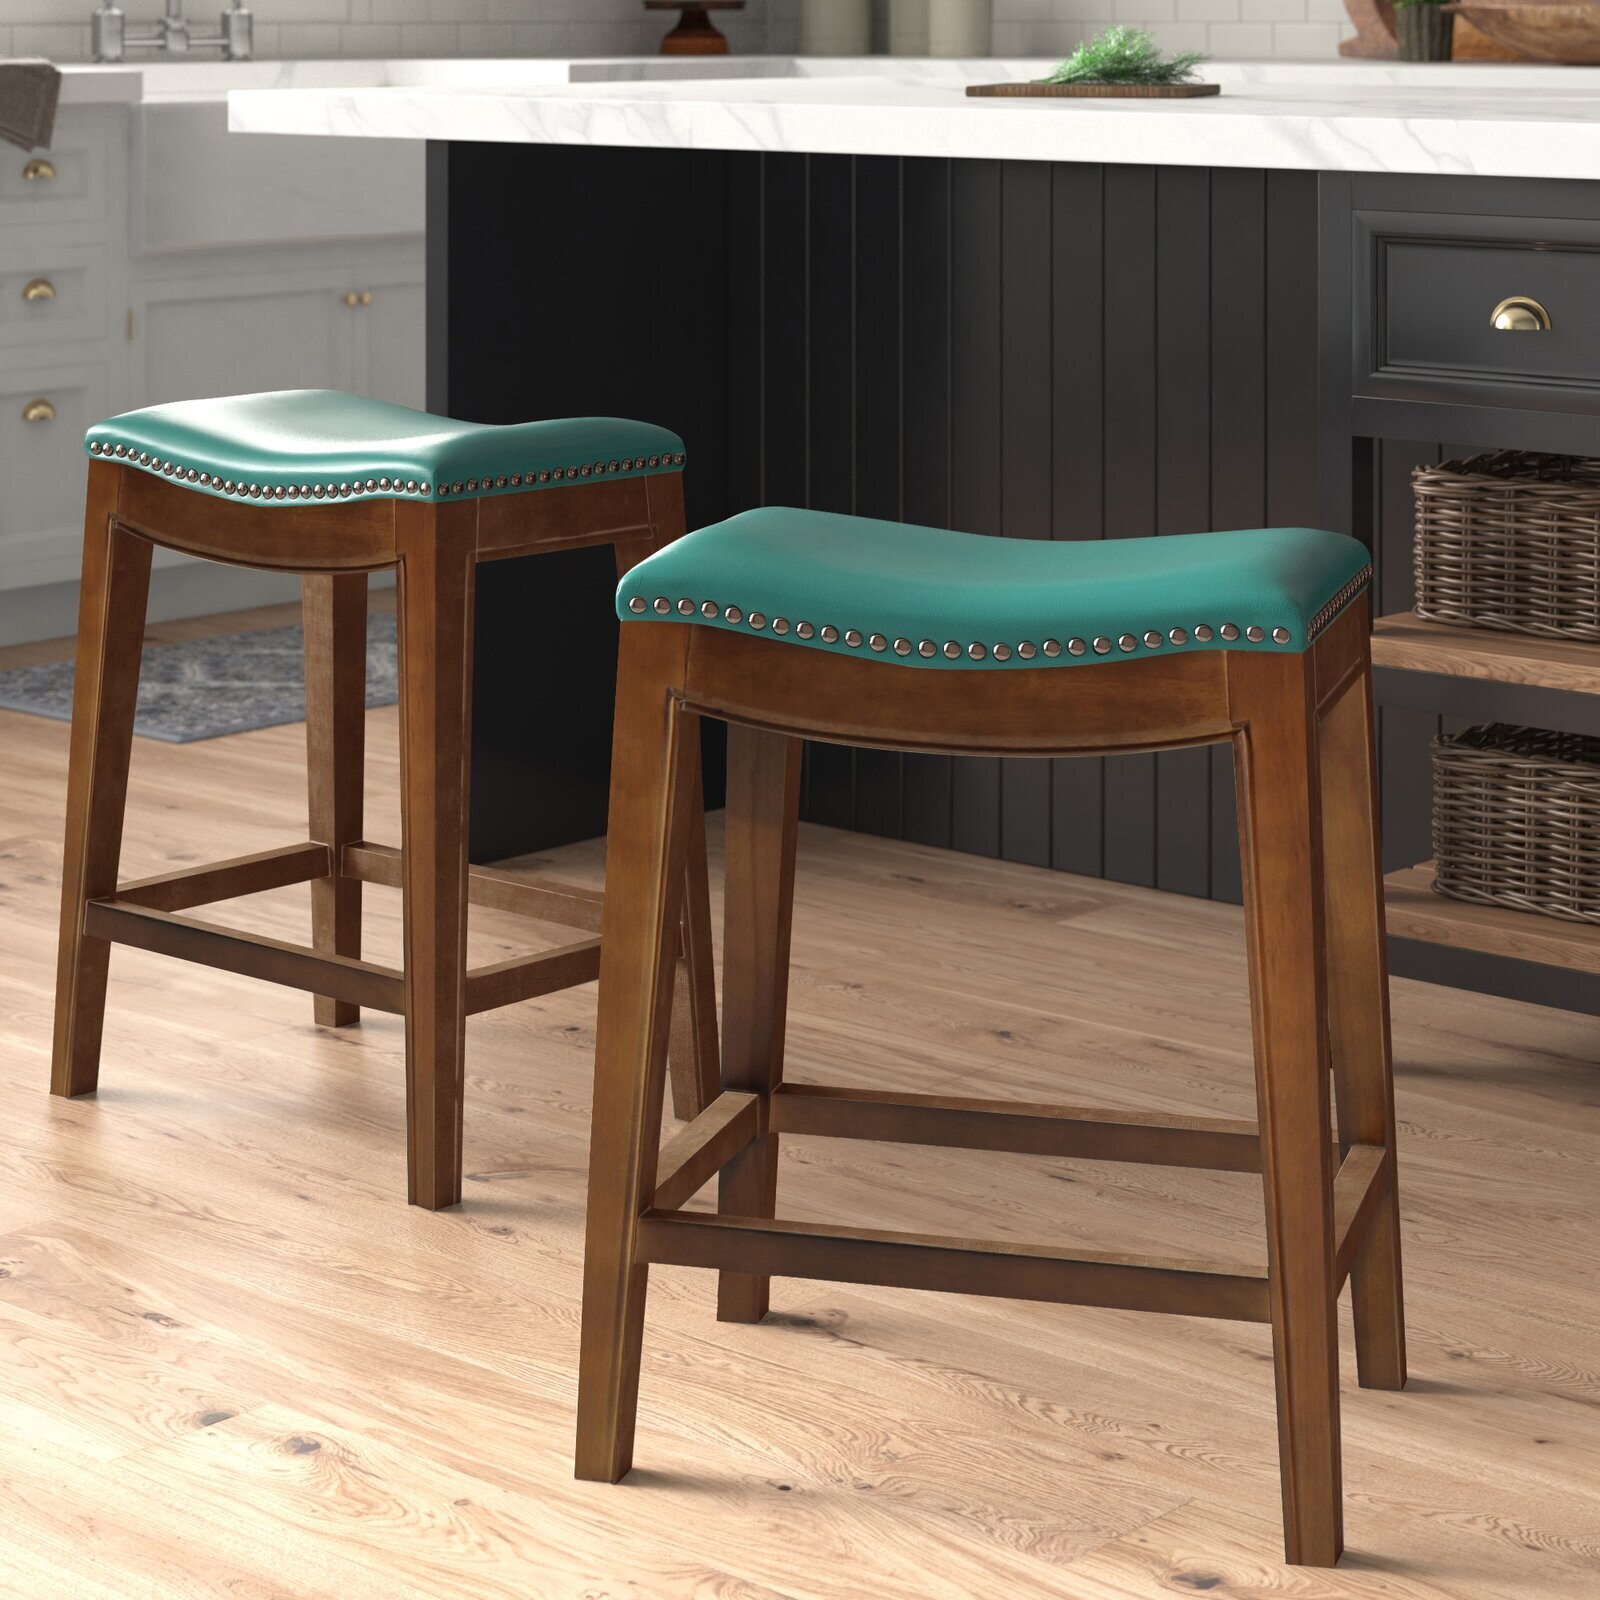 Classic style turquoise bar stool